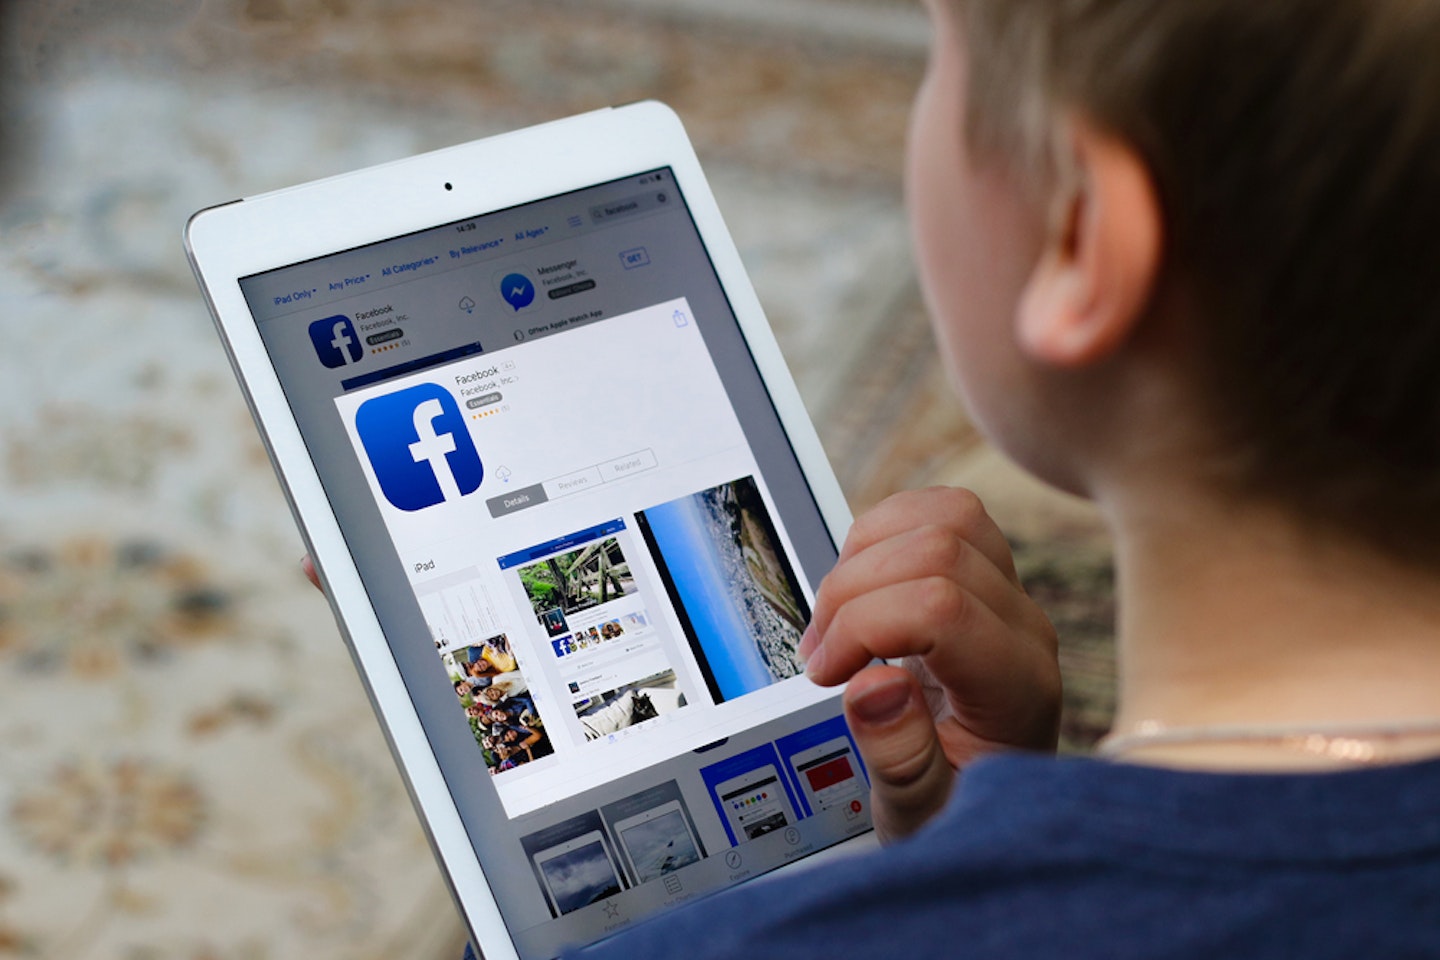 Facebook launches new messenger app aimed at children under 13